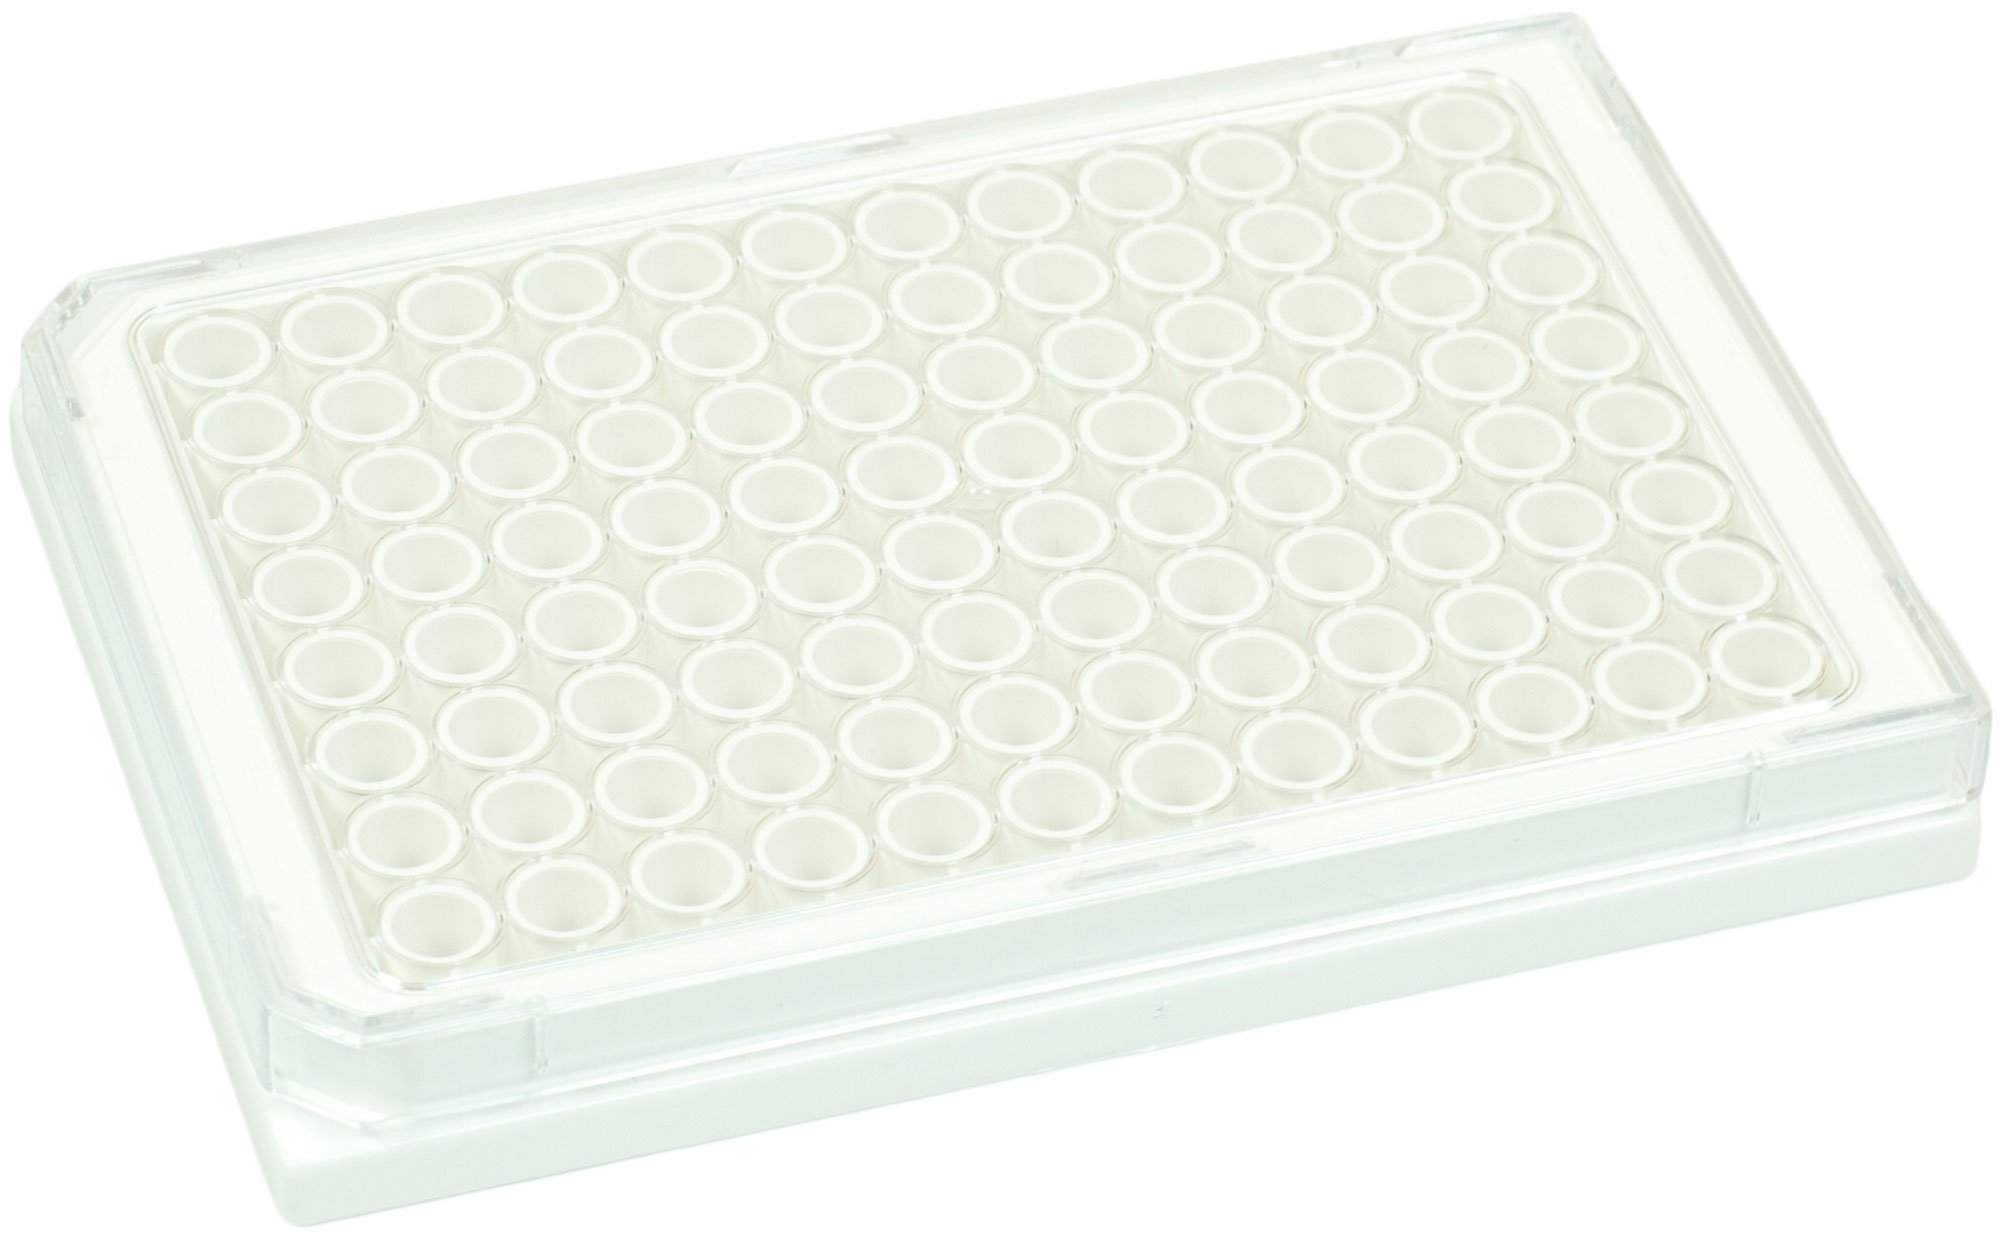 BRANDplates cellGrade Premium Treated Sterile Surface 96-Well Plate - White, Transparent F-Bottom